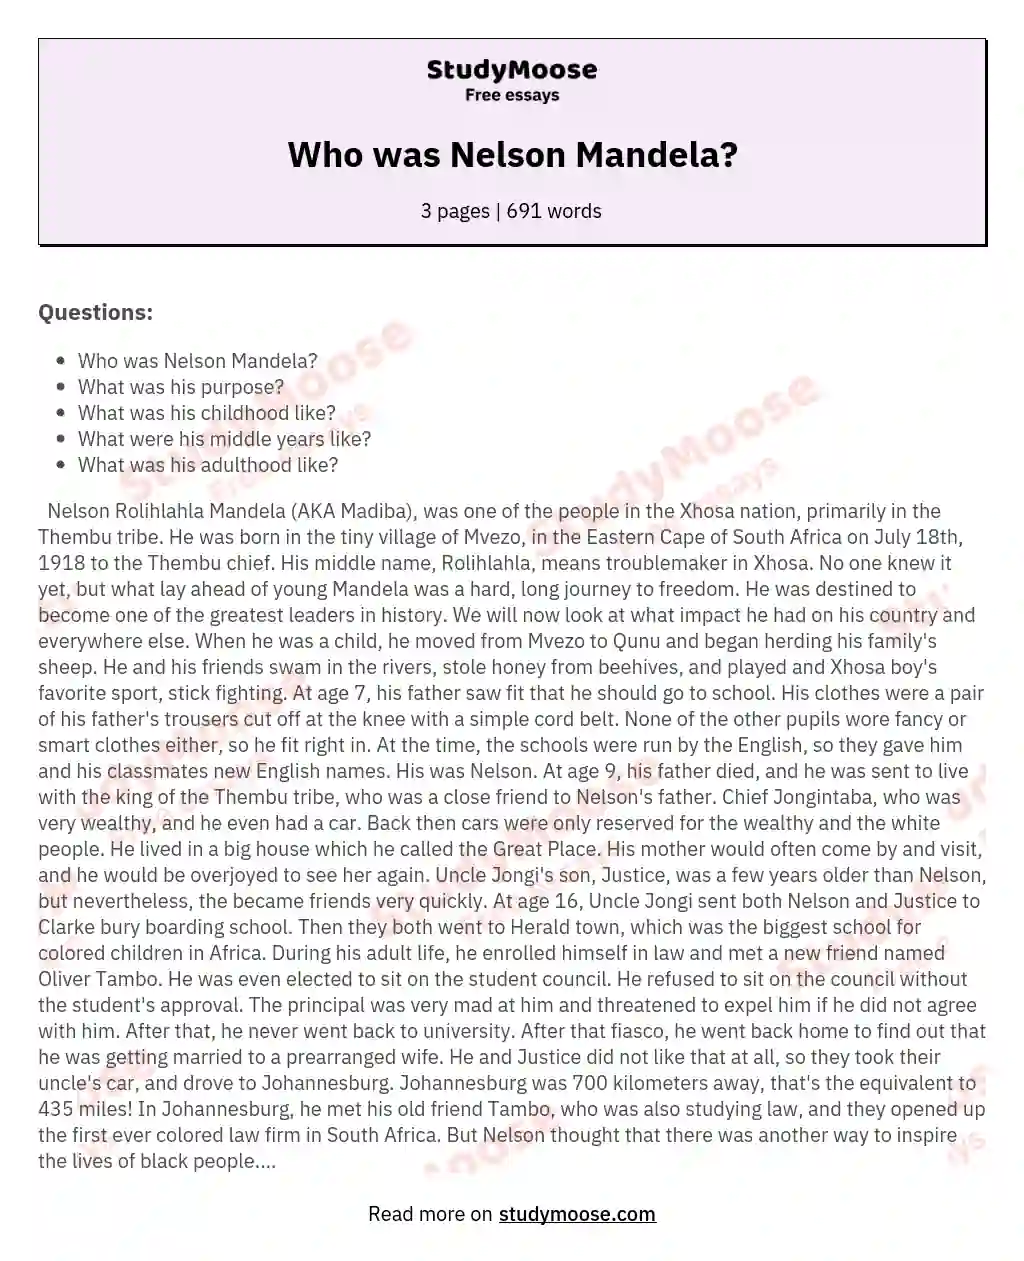 Who was Nelson Mandela? essay